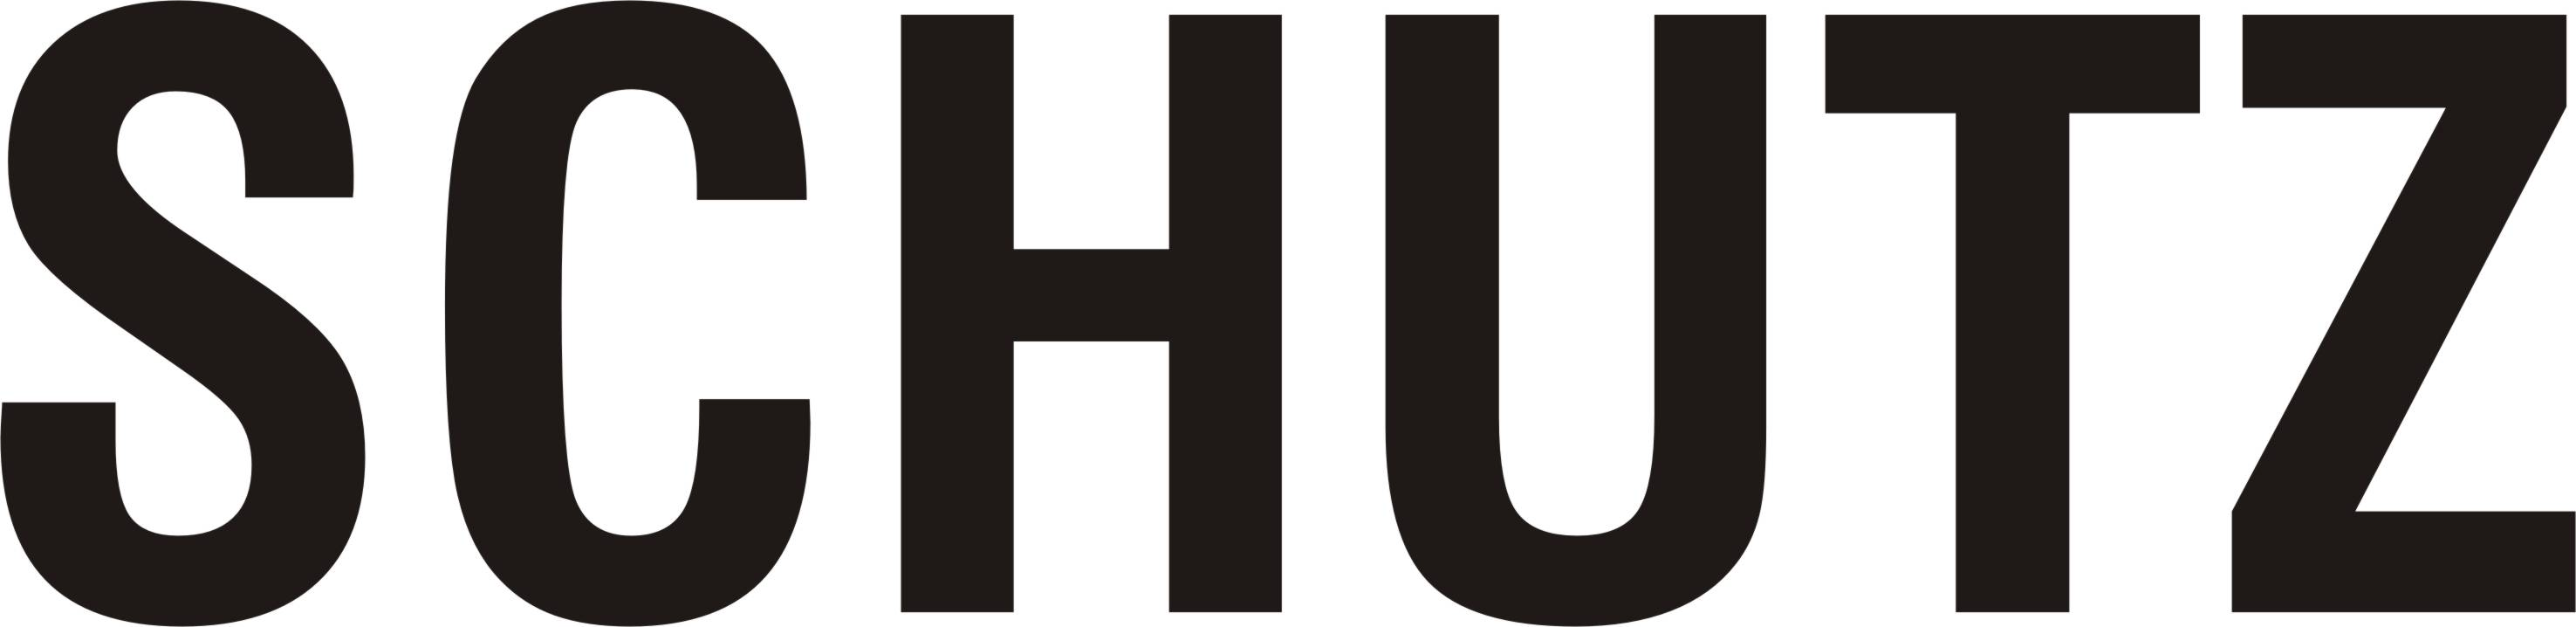 Schutz Logo - Because